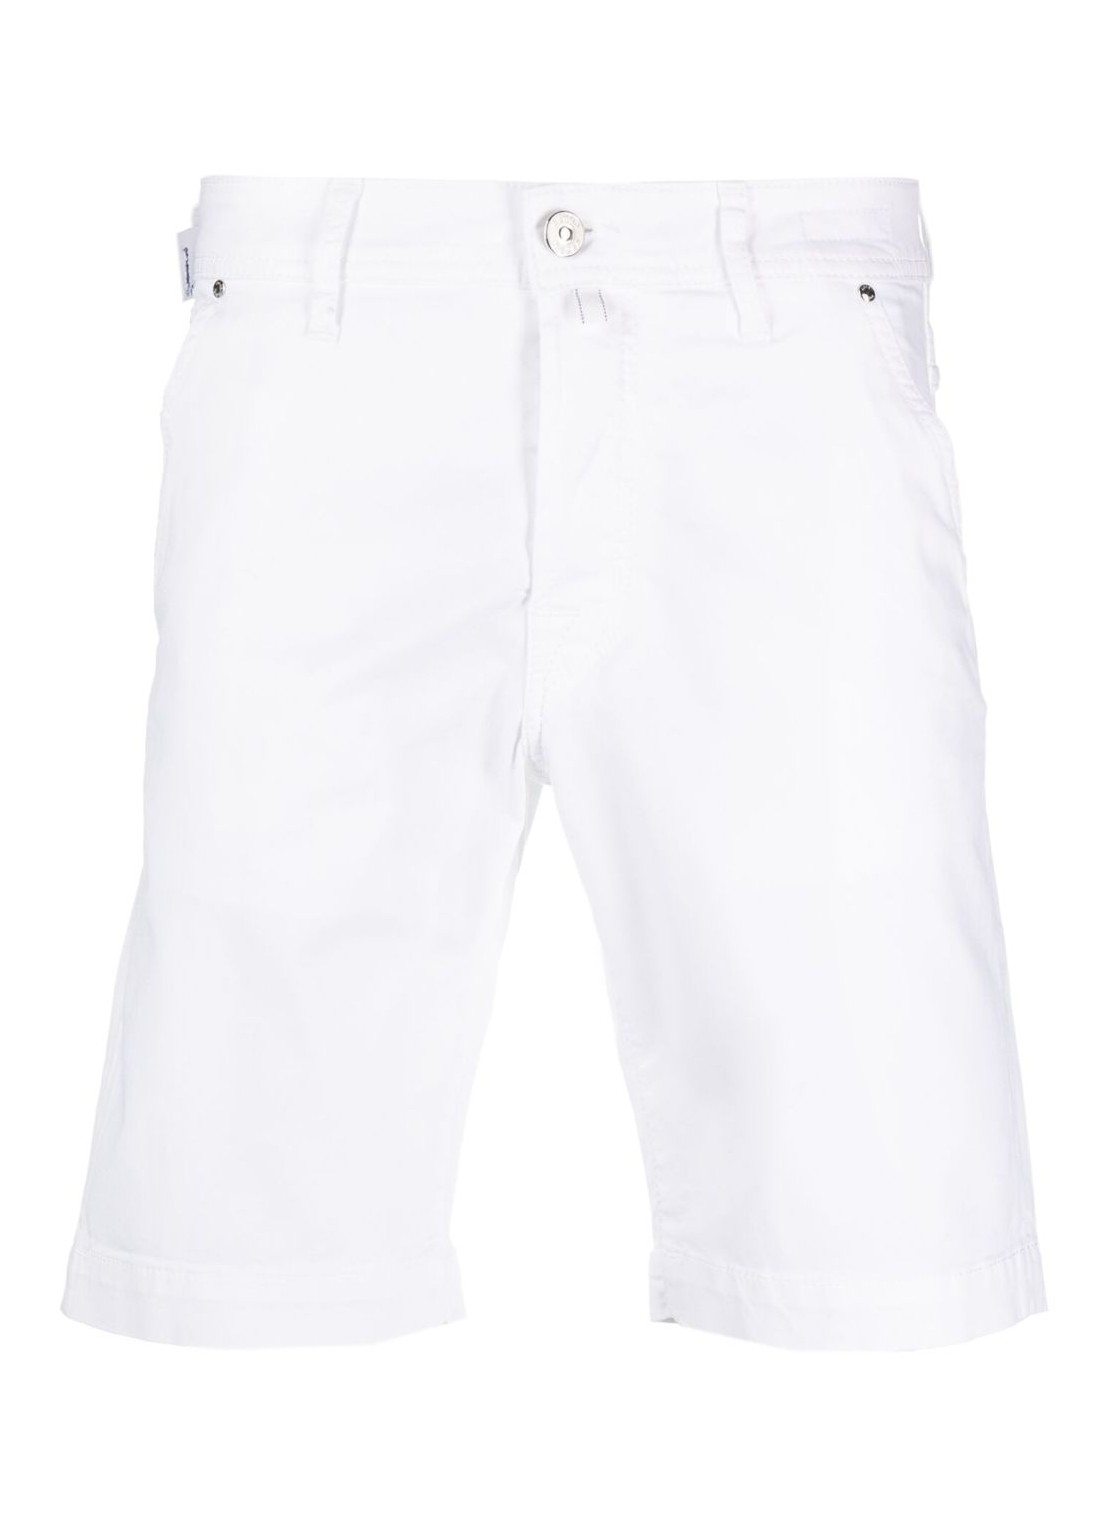 Pantalon corto jacob cohen short pant manbermuda 5t slim  fit lou - uoe0236s3756 a00 talla blanco
 